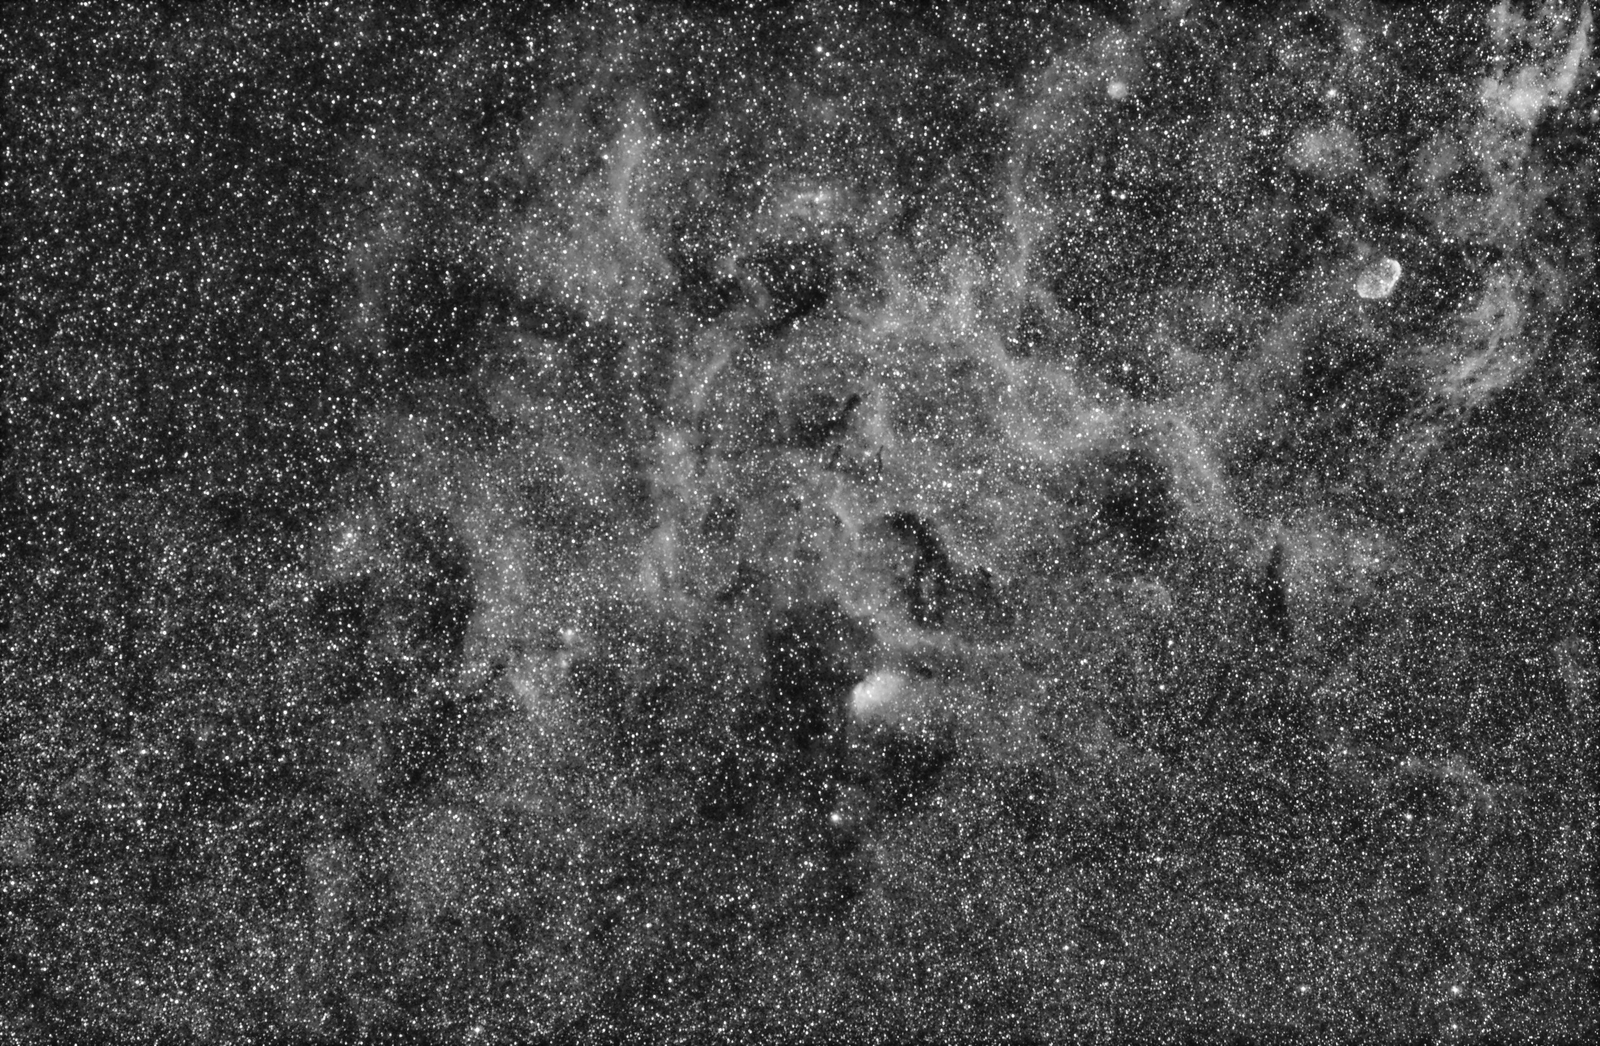 Below The Crescent Nebula